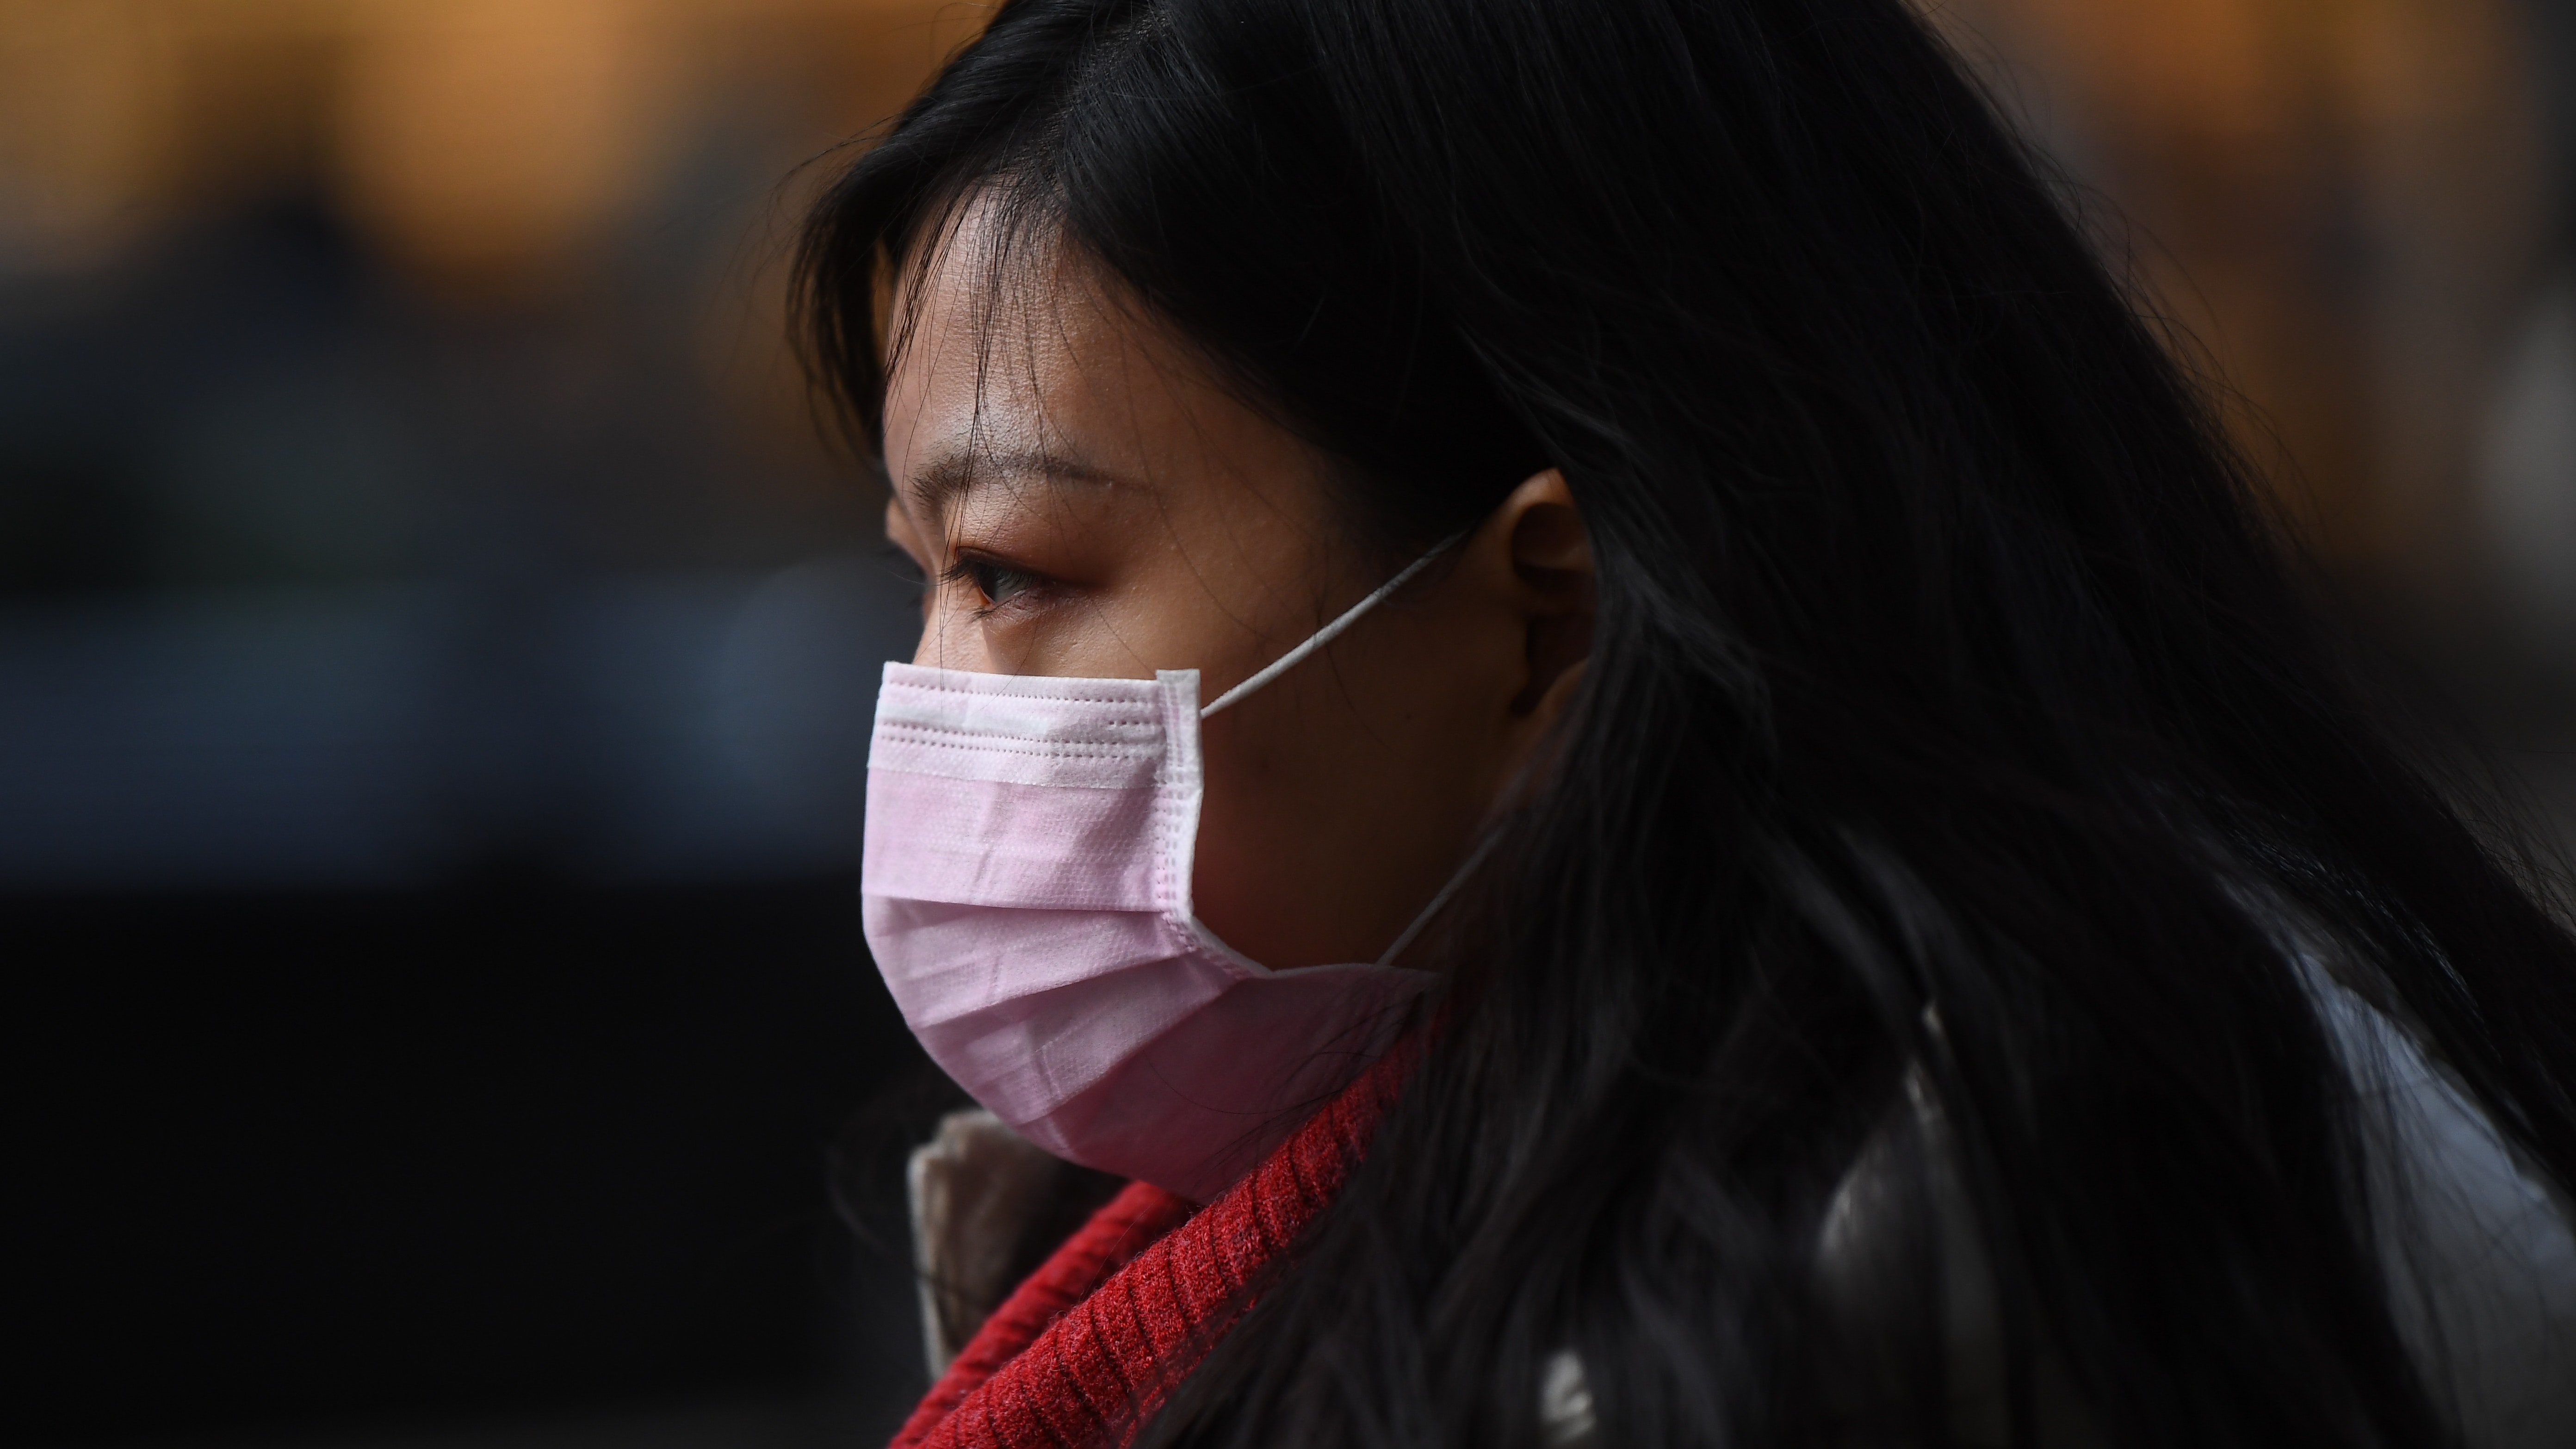 Coronavirus: Dog face mask sales skyrocket in China